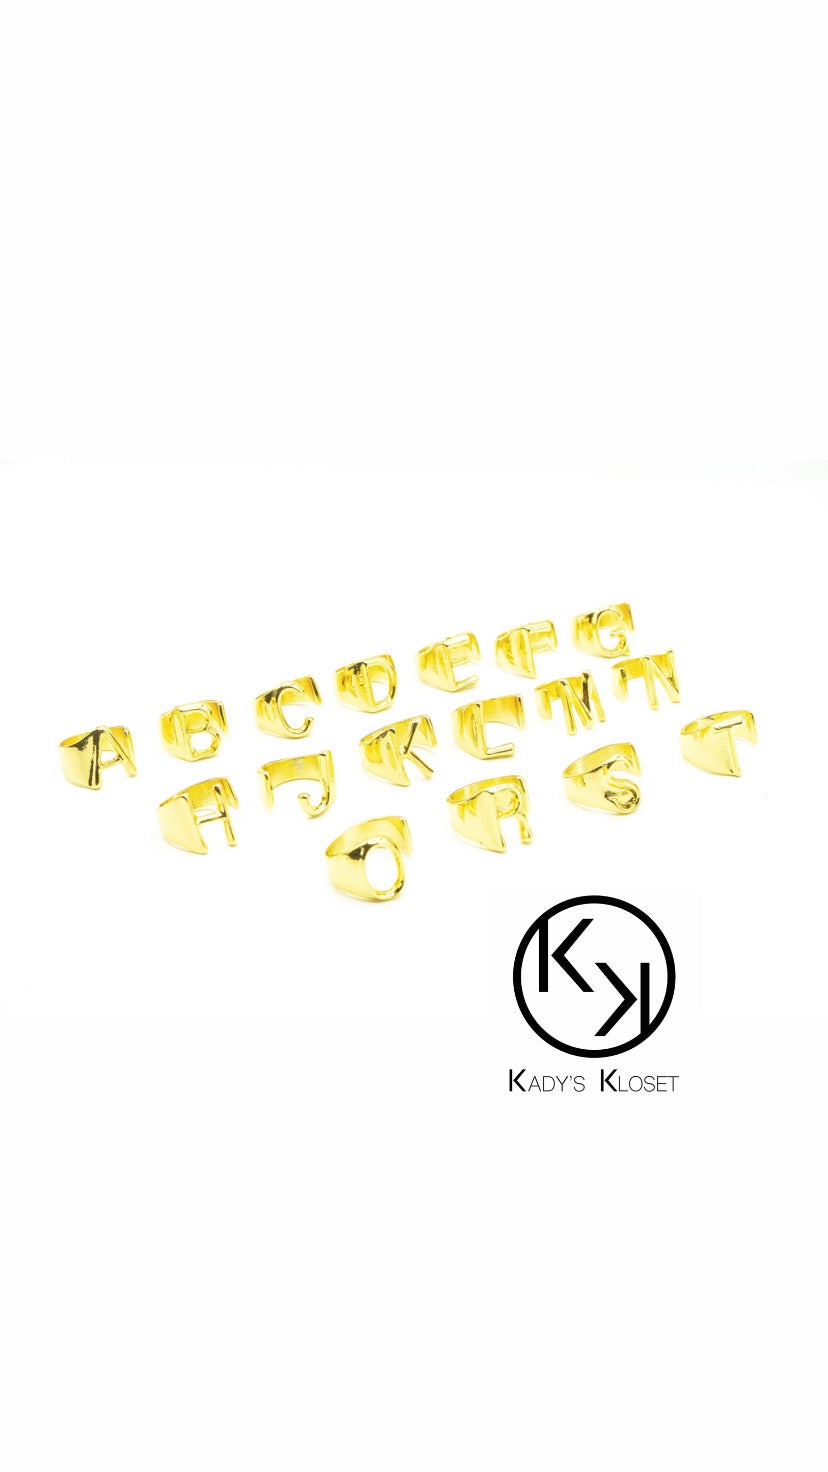 Initial Rings: Adjustable Size | Kady's Kloset